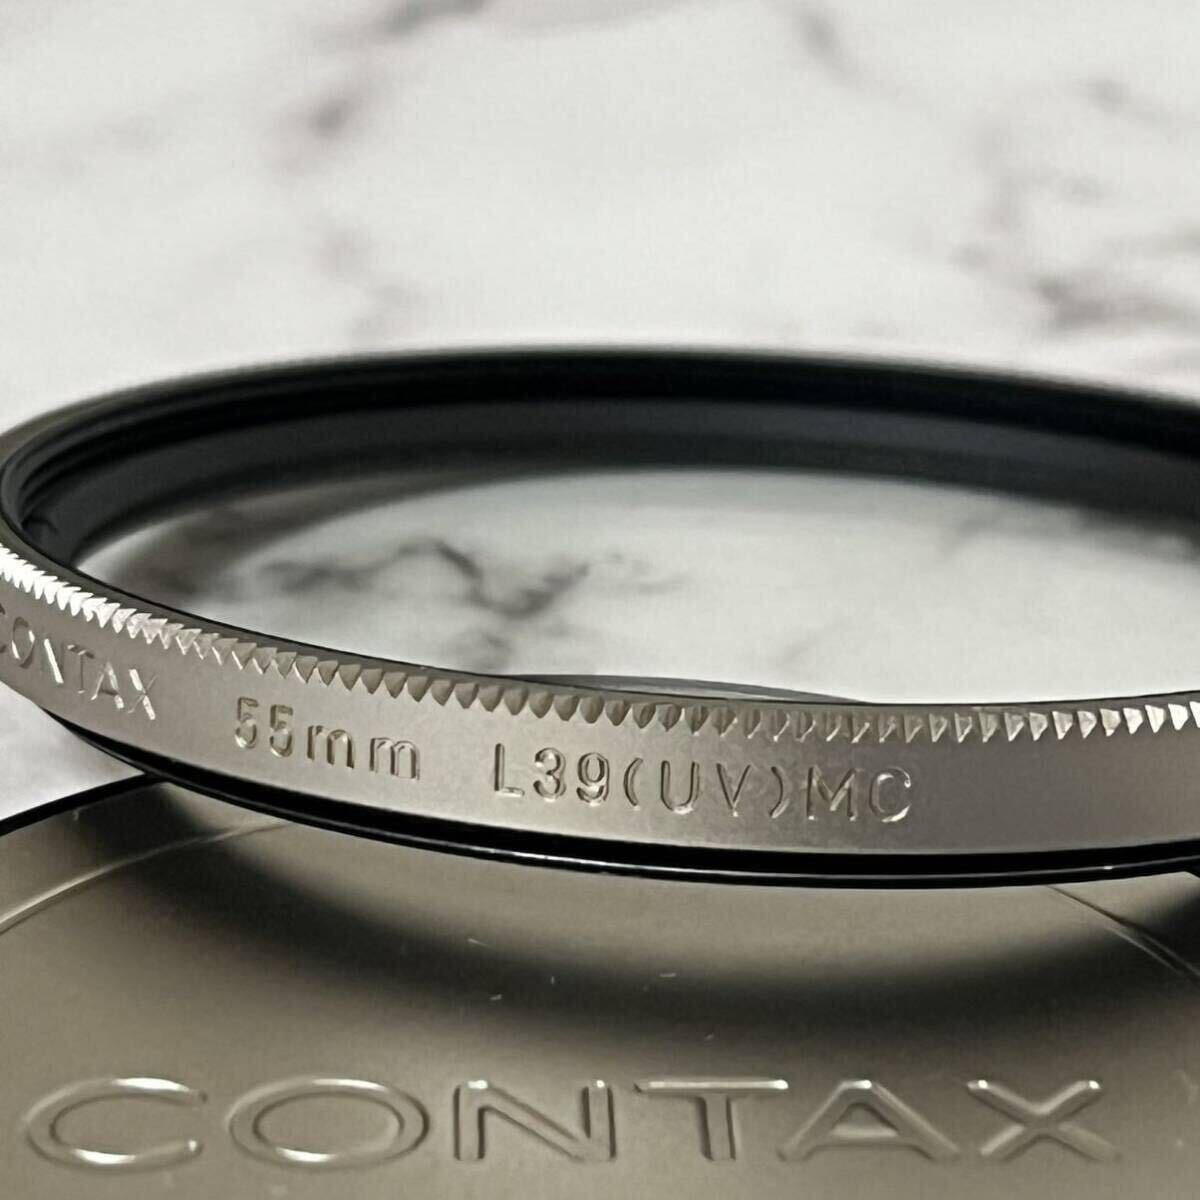 CONTAX Contax Carl Zeiss Biogon 21mm F2.8 lens 55mm L39(UV)MC